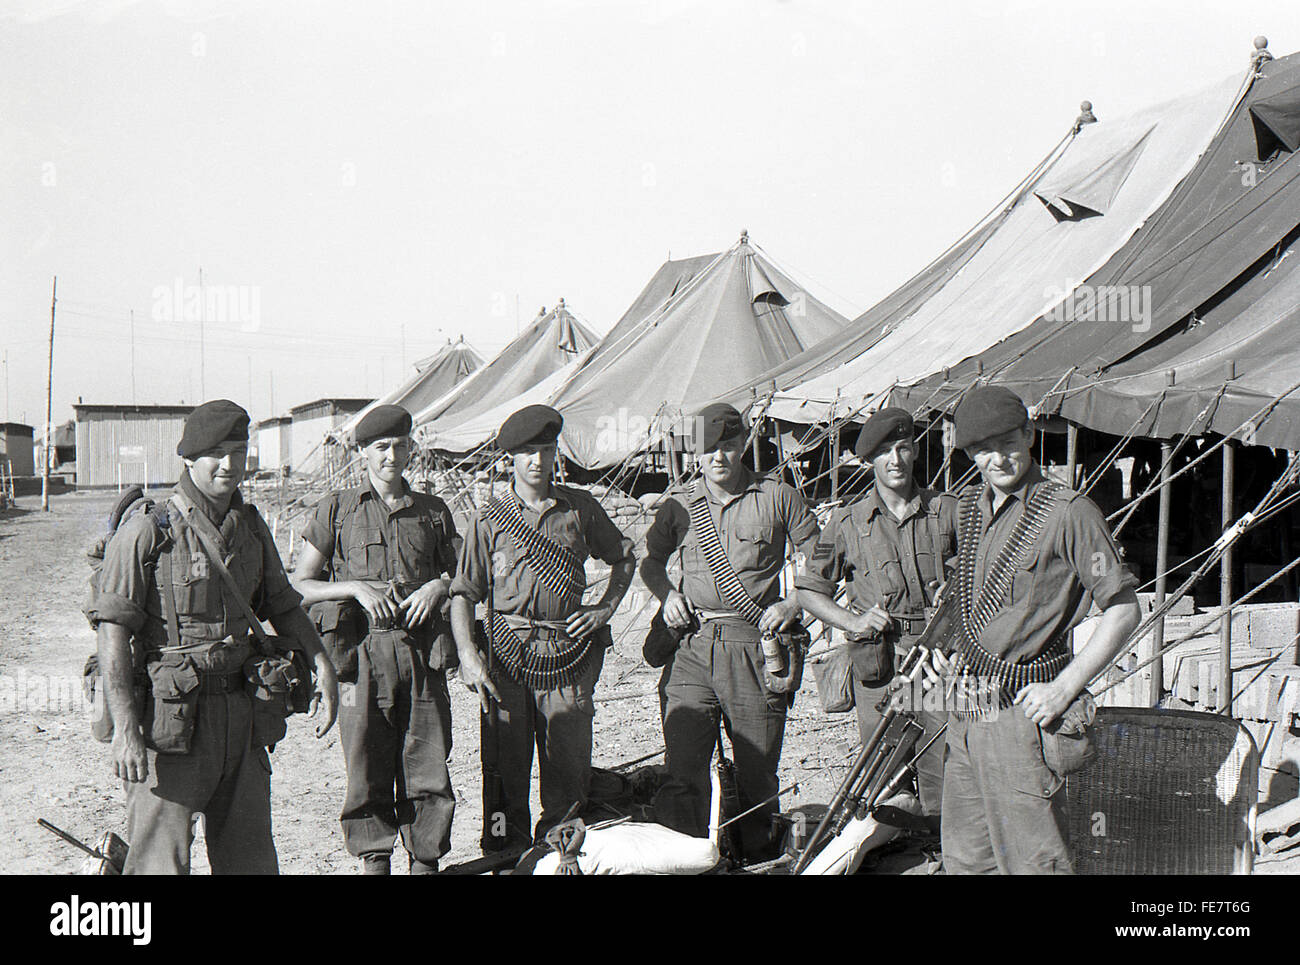 42 Cdo RM patrol prep Khormaksar airfield Aden Yemen 1967 British withdrawal Stock Photo